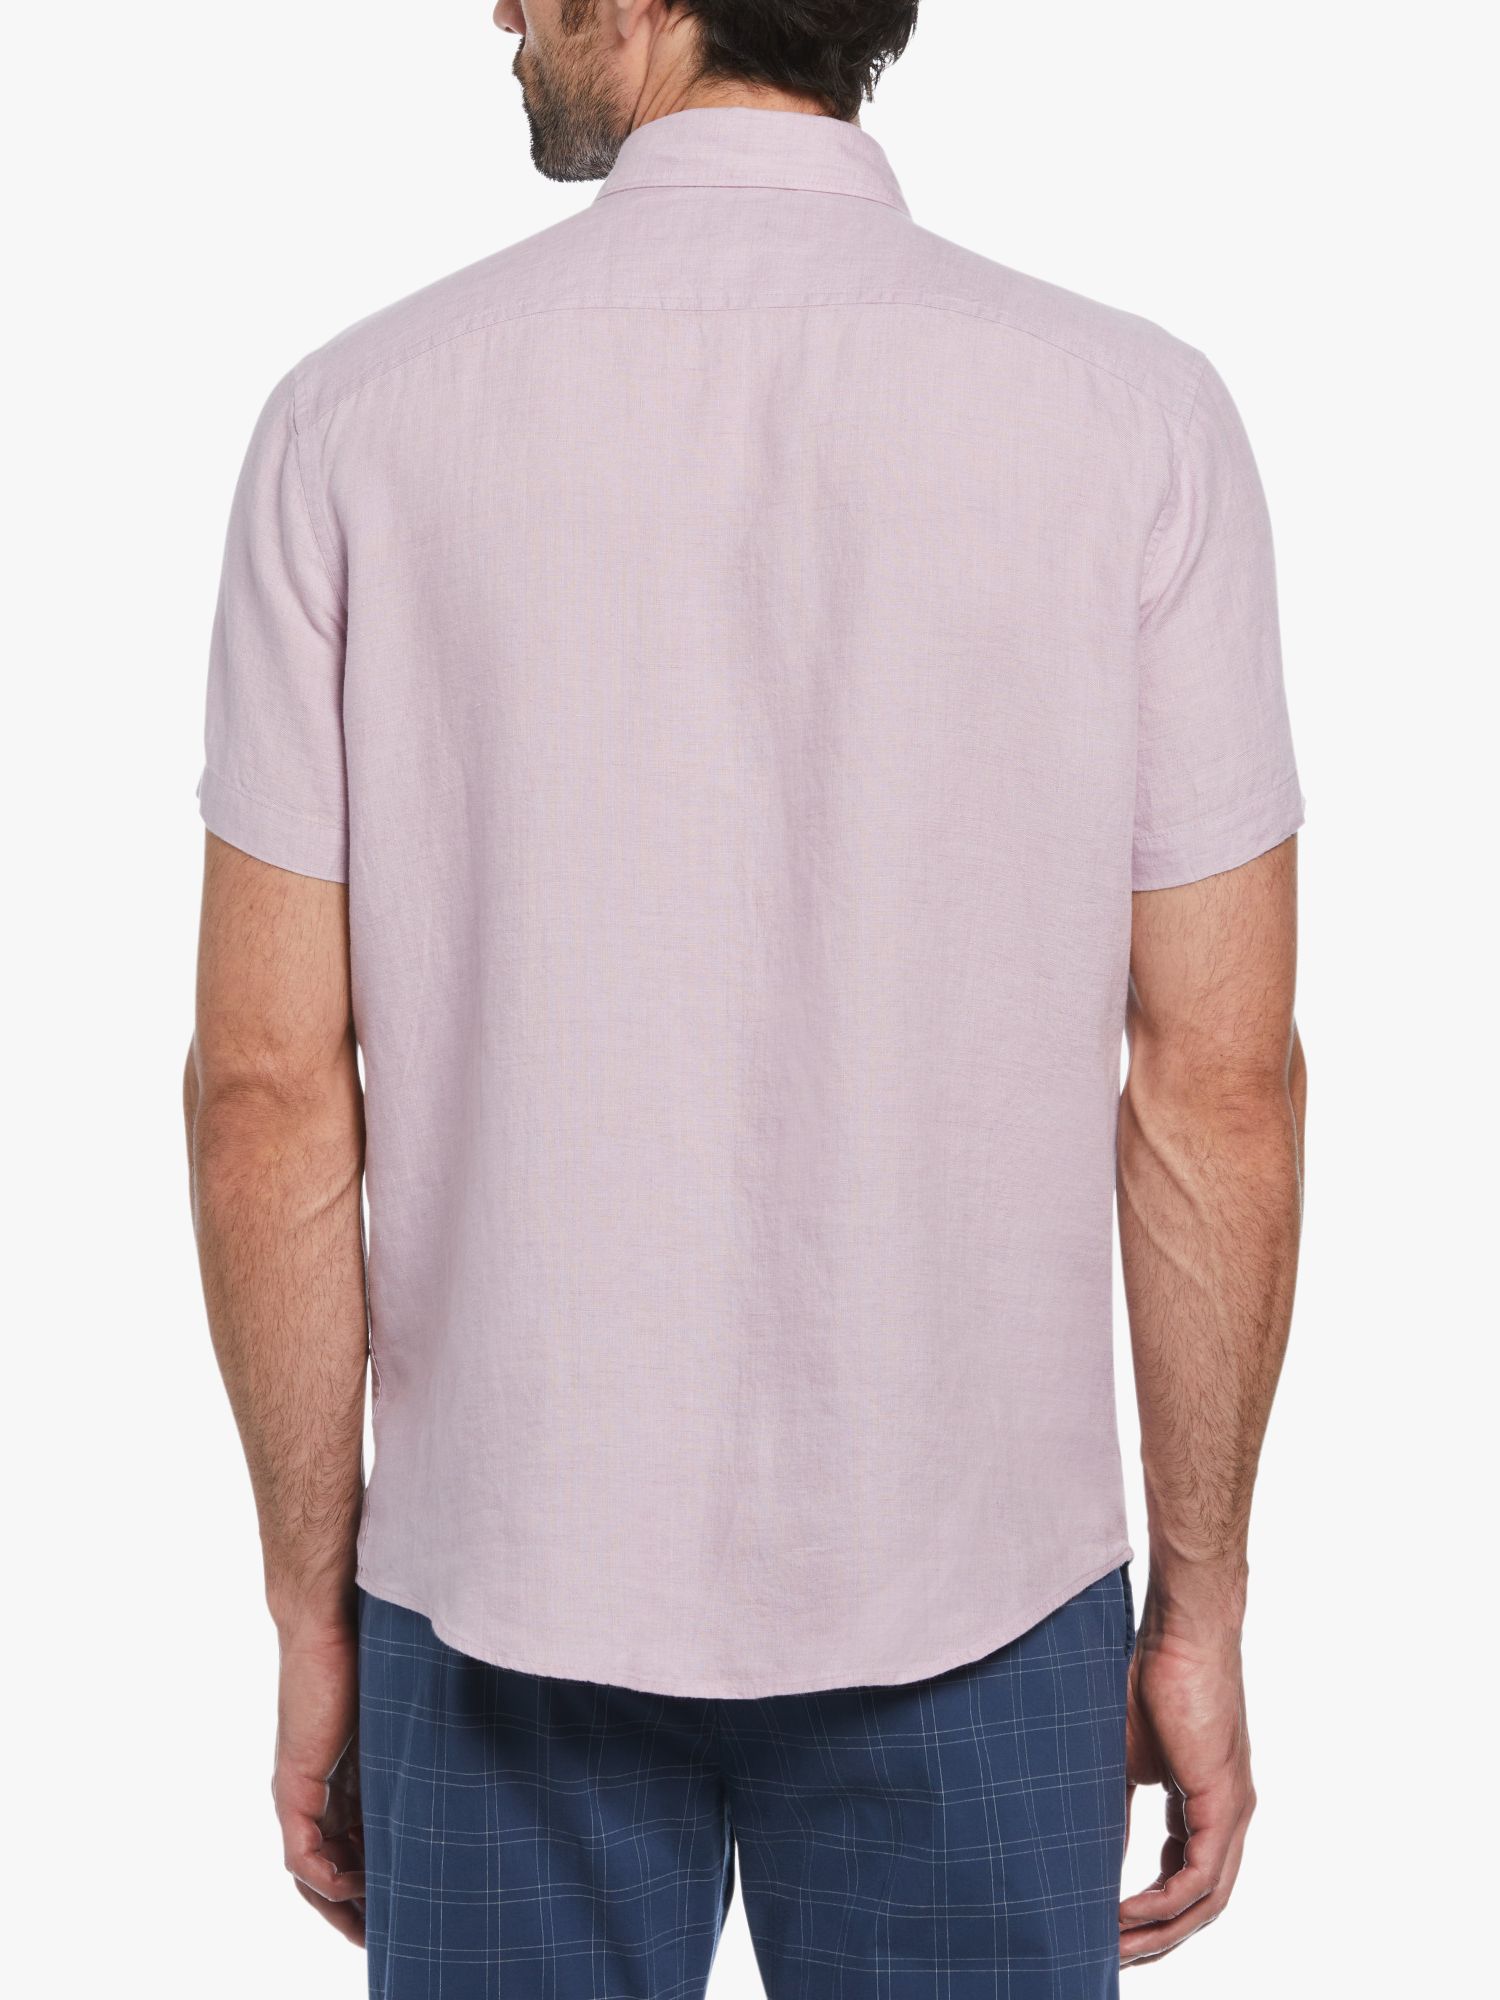 Original Penguin Linen Short Sleeve Shirt, Lavender Frost, M